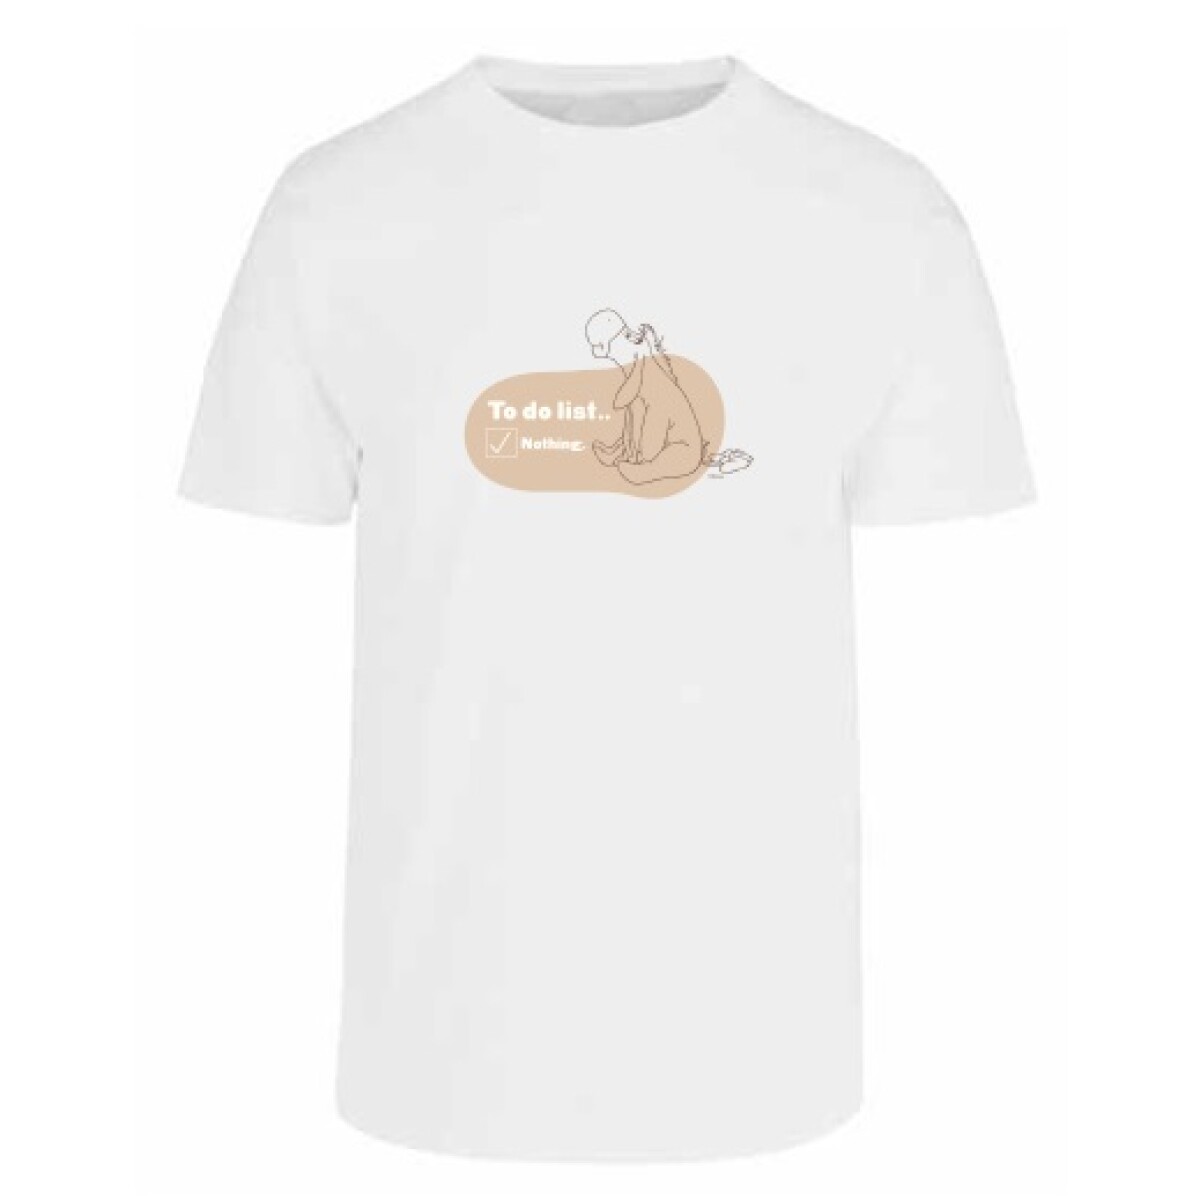 Camiseta Remera a la Base Disney Pooh Igor - BLANCO 